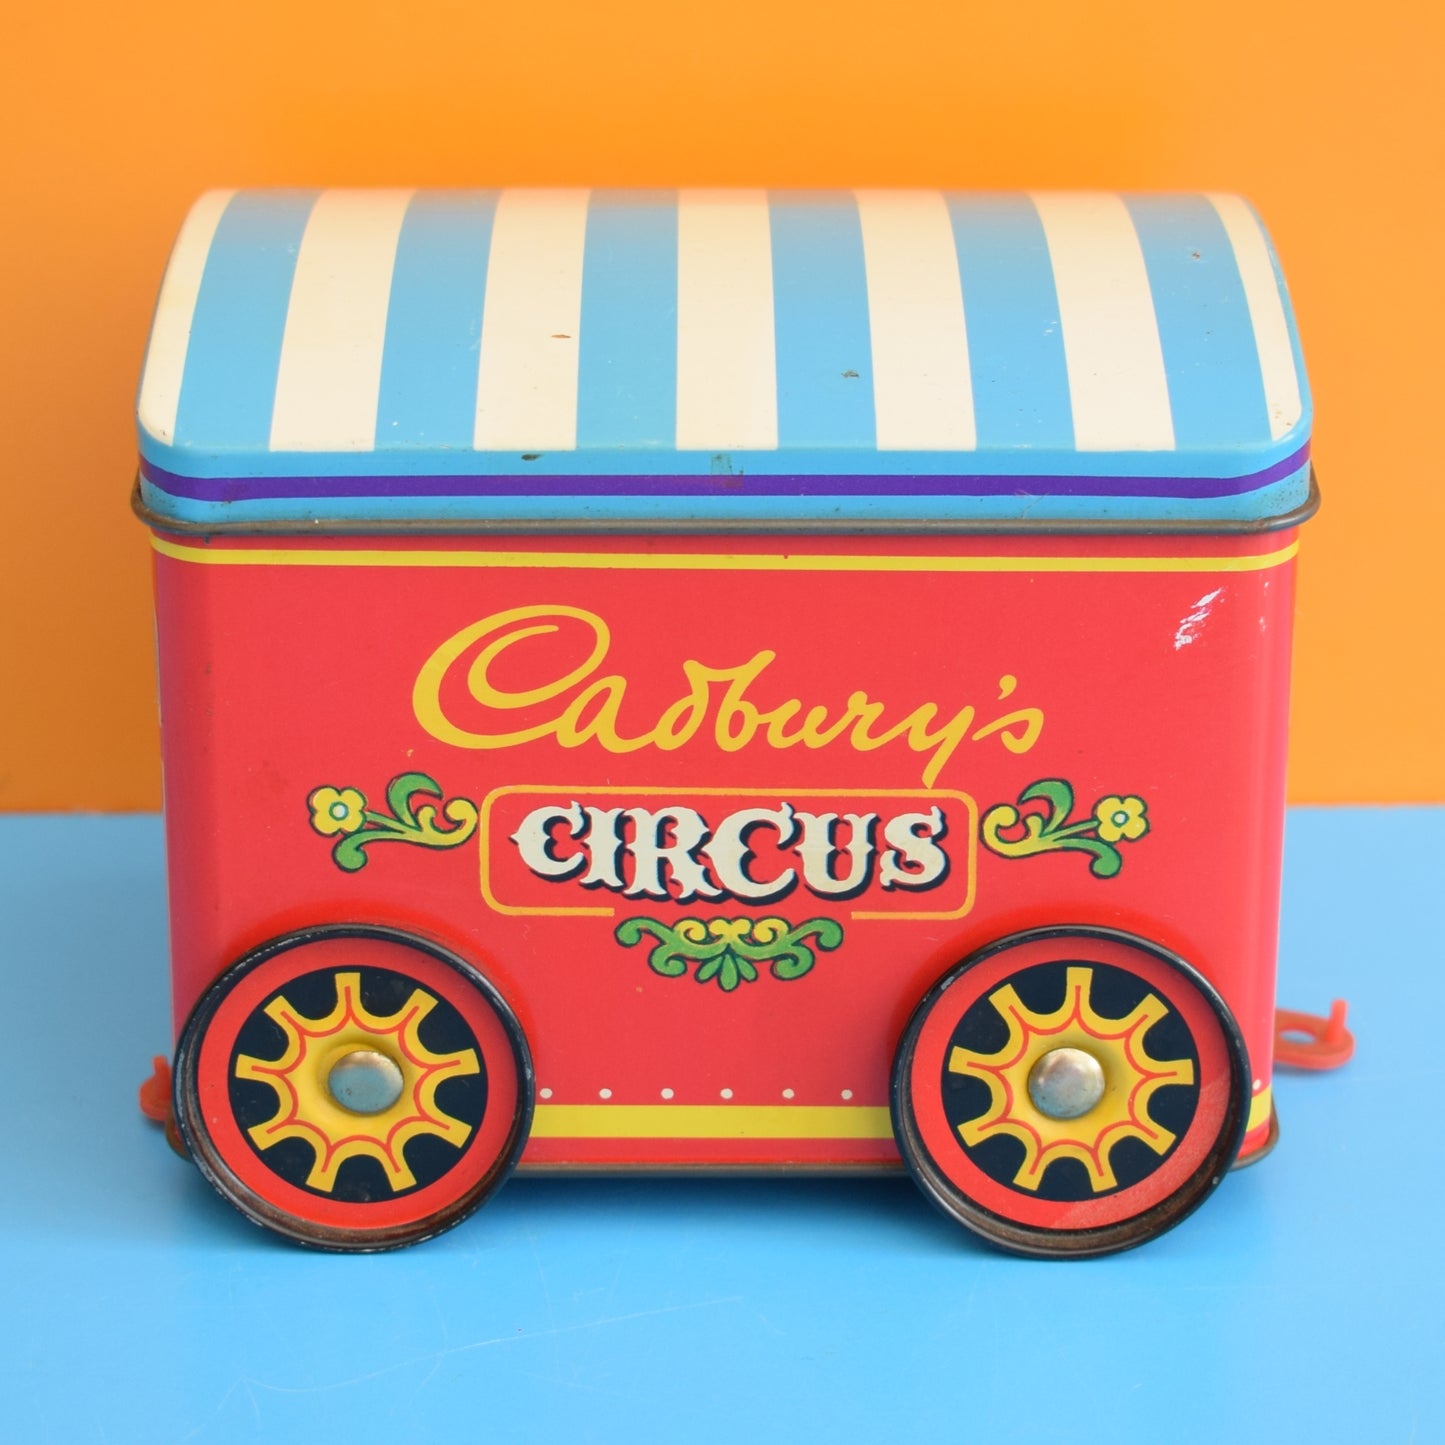 Vintage 1970s Metal Circus Train Tin - Cadbury's